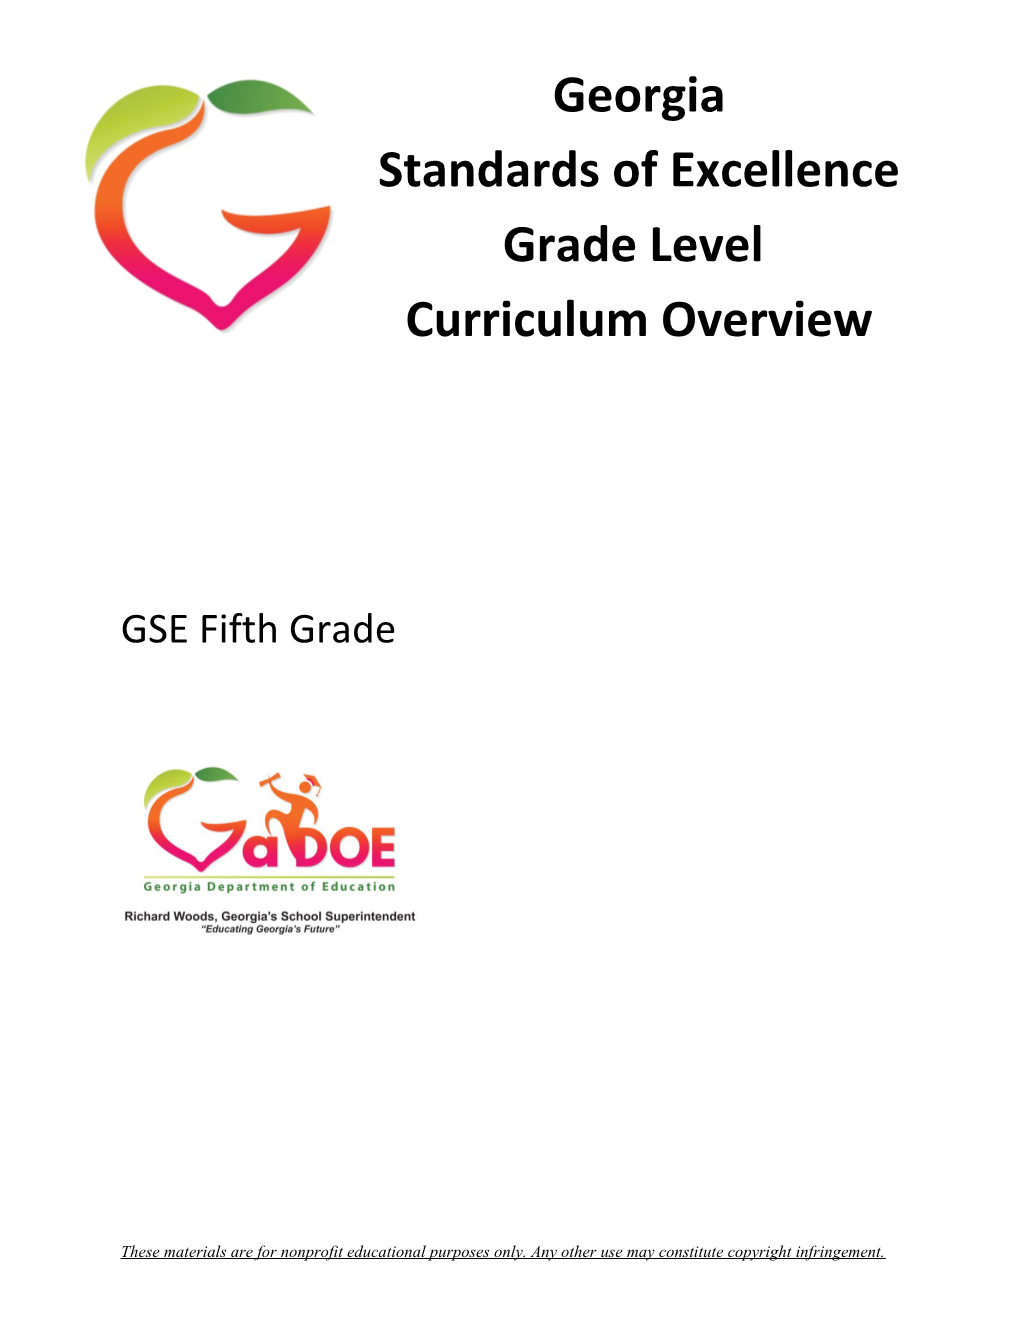 Fifth Grade - Grade Level Overview